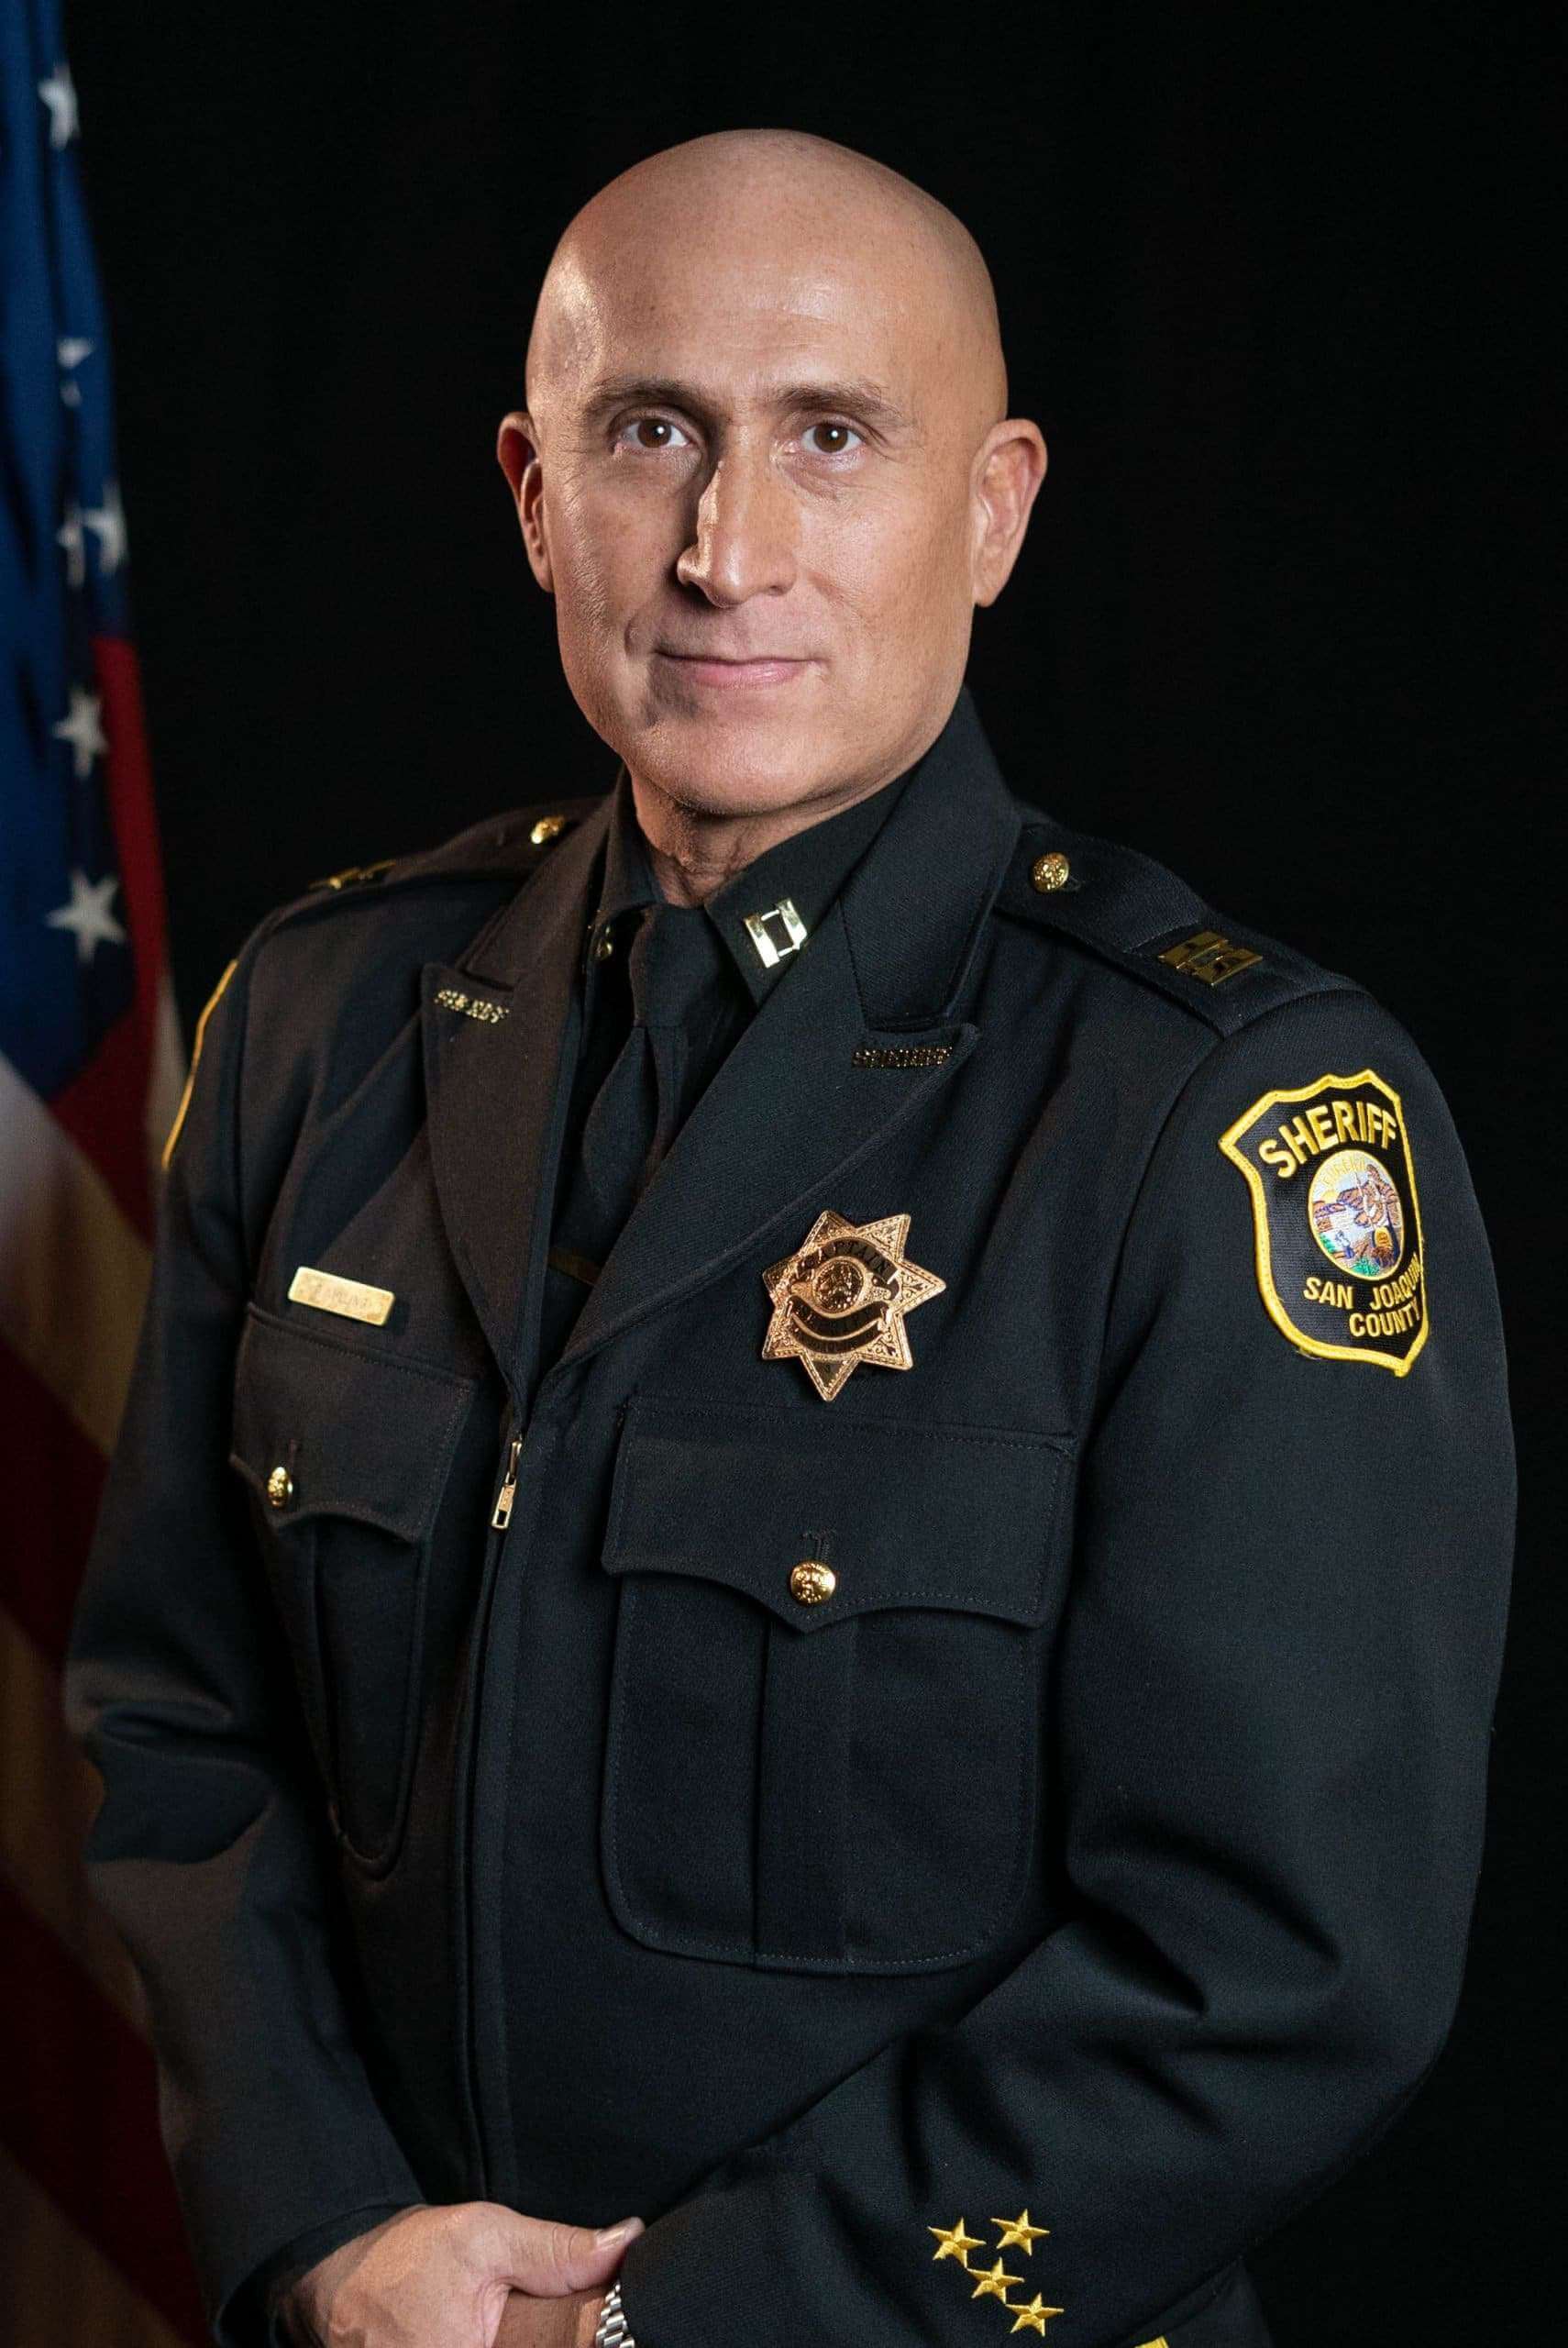 San Joaquin County Sheriff Captain Dustin Kulling